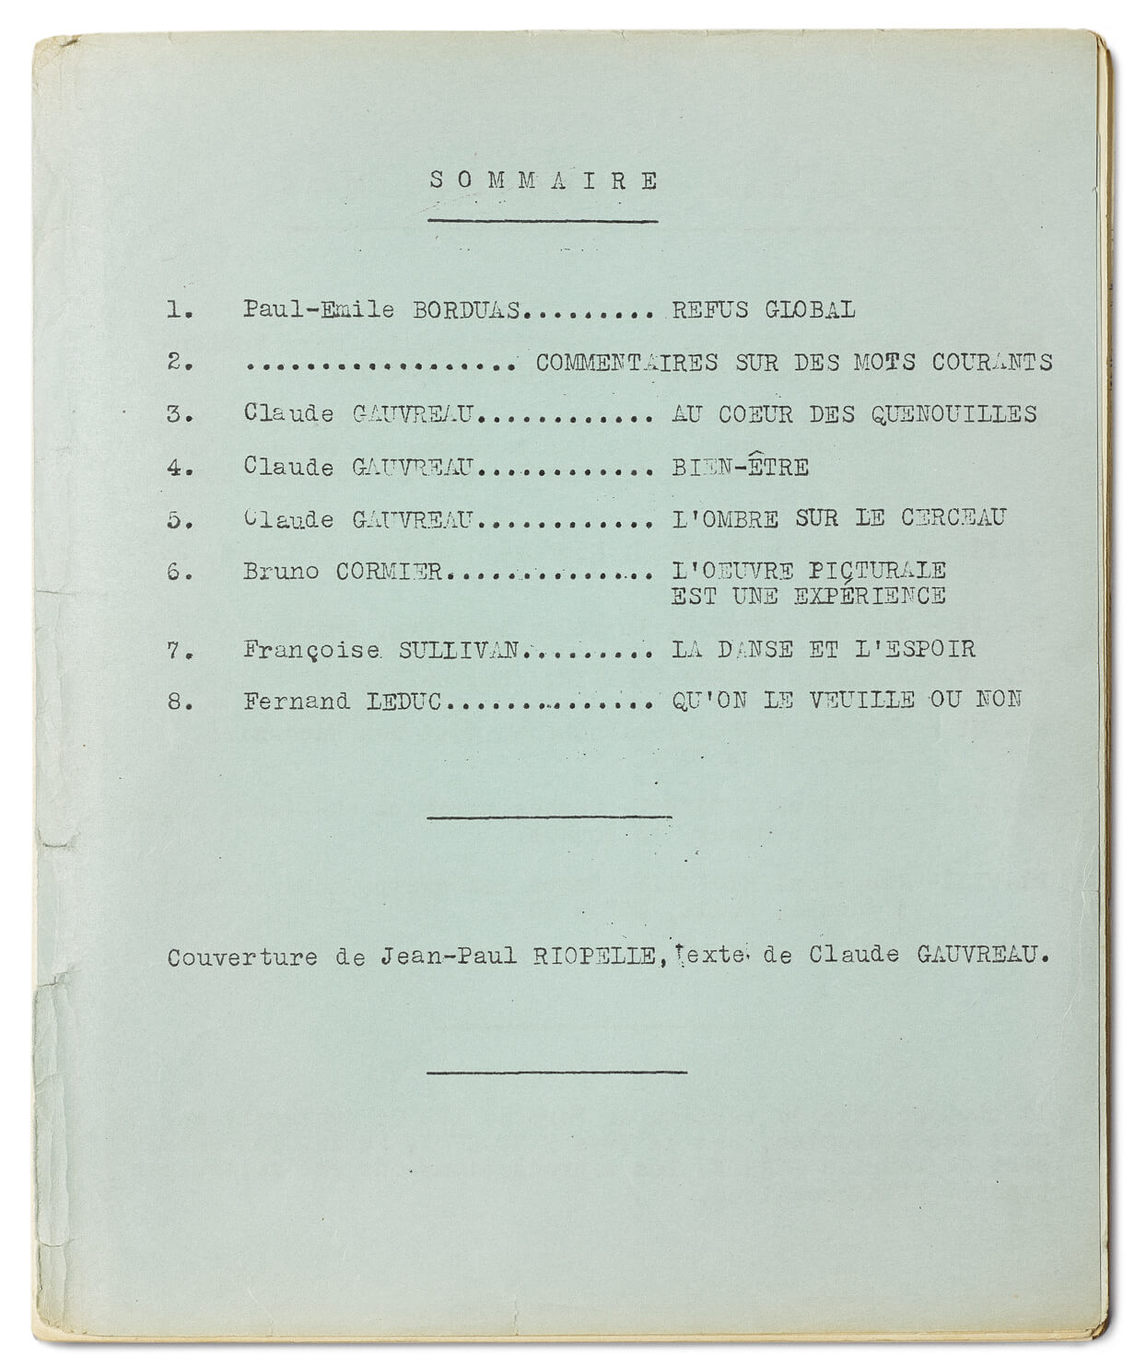 Refus global, manifeste, 1948.